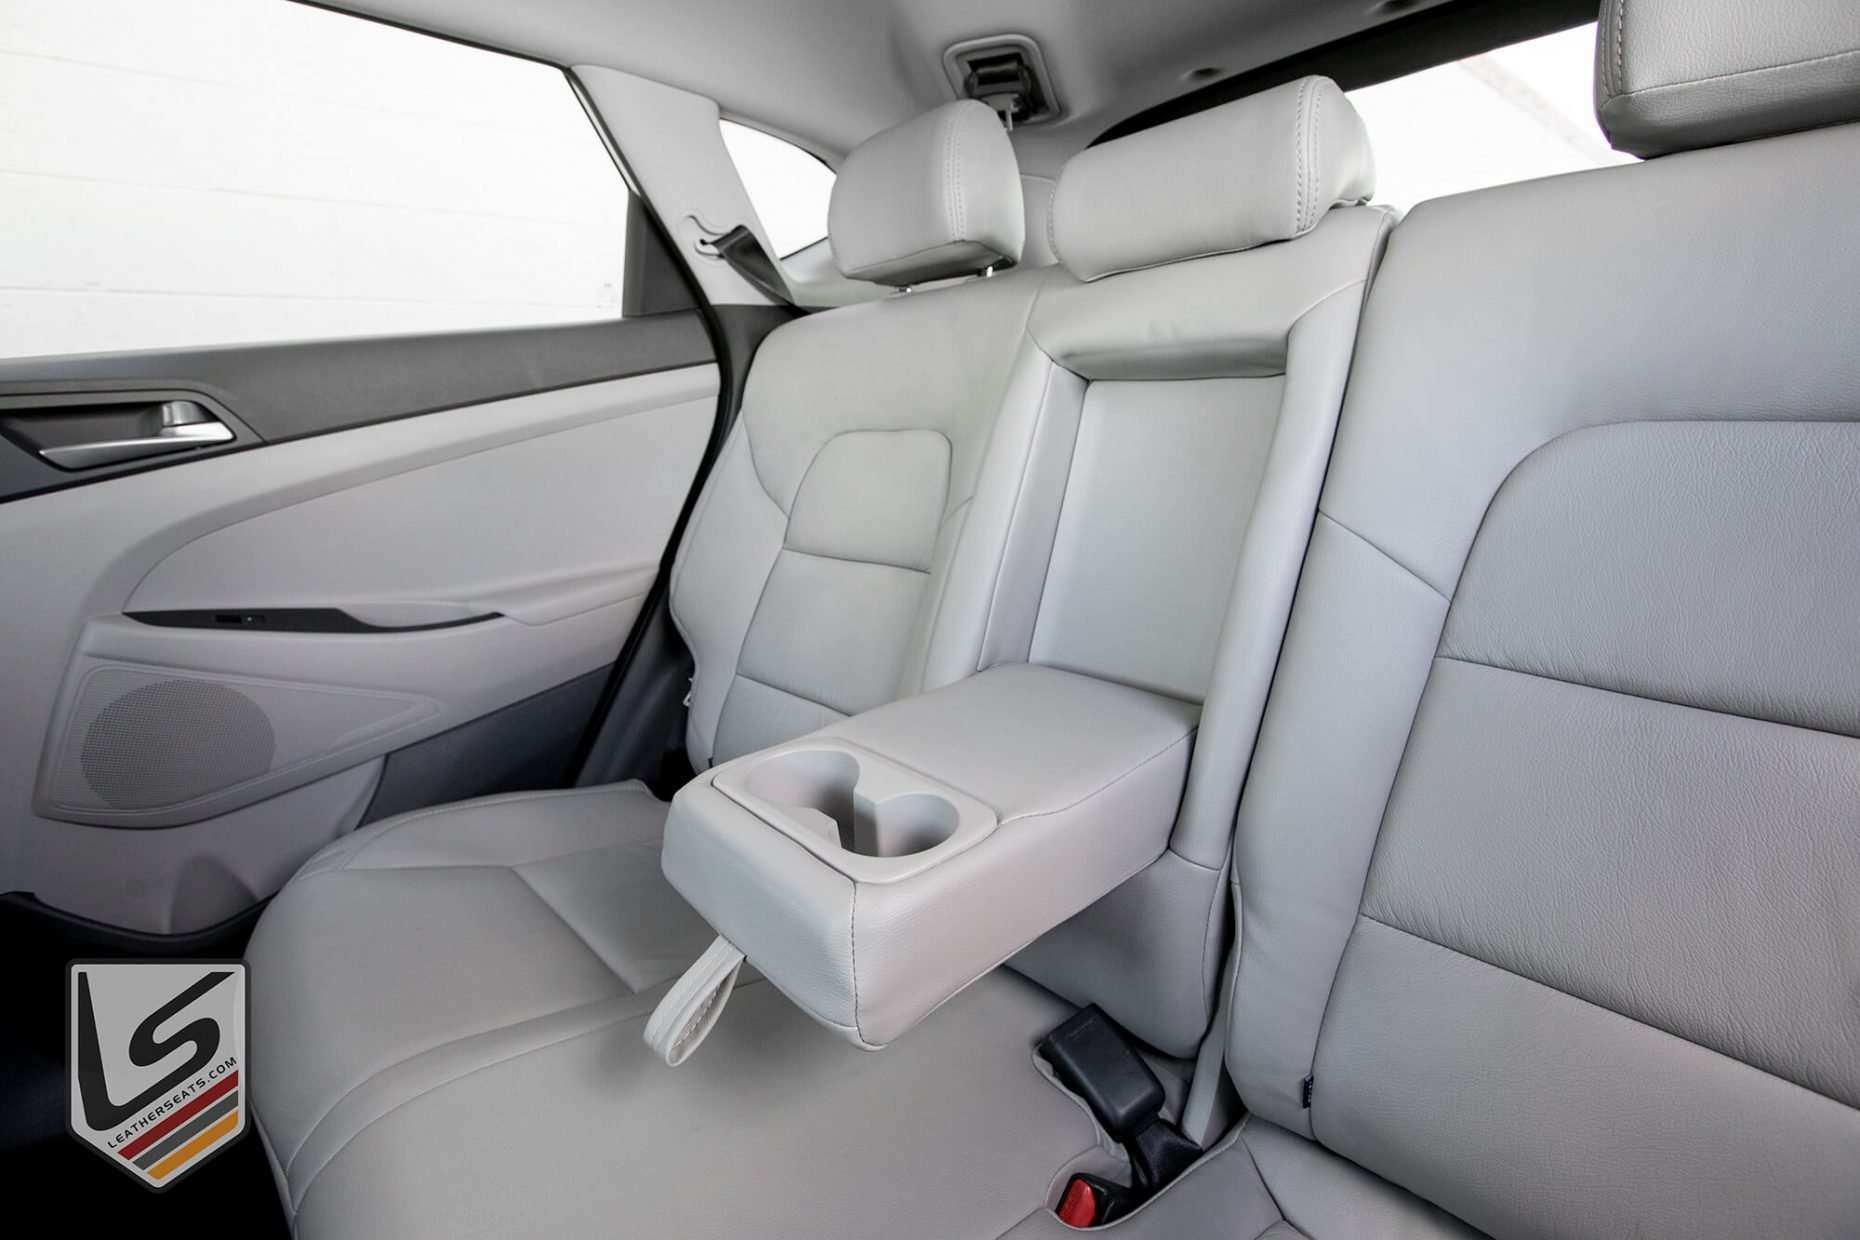 Rear seat leather armrest/cup ohlder - folded down